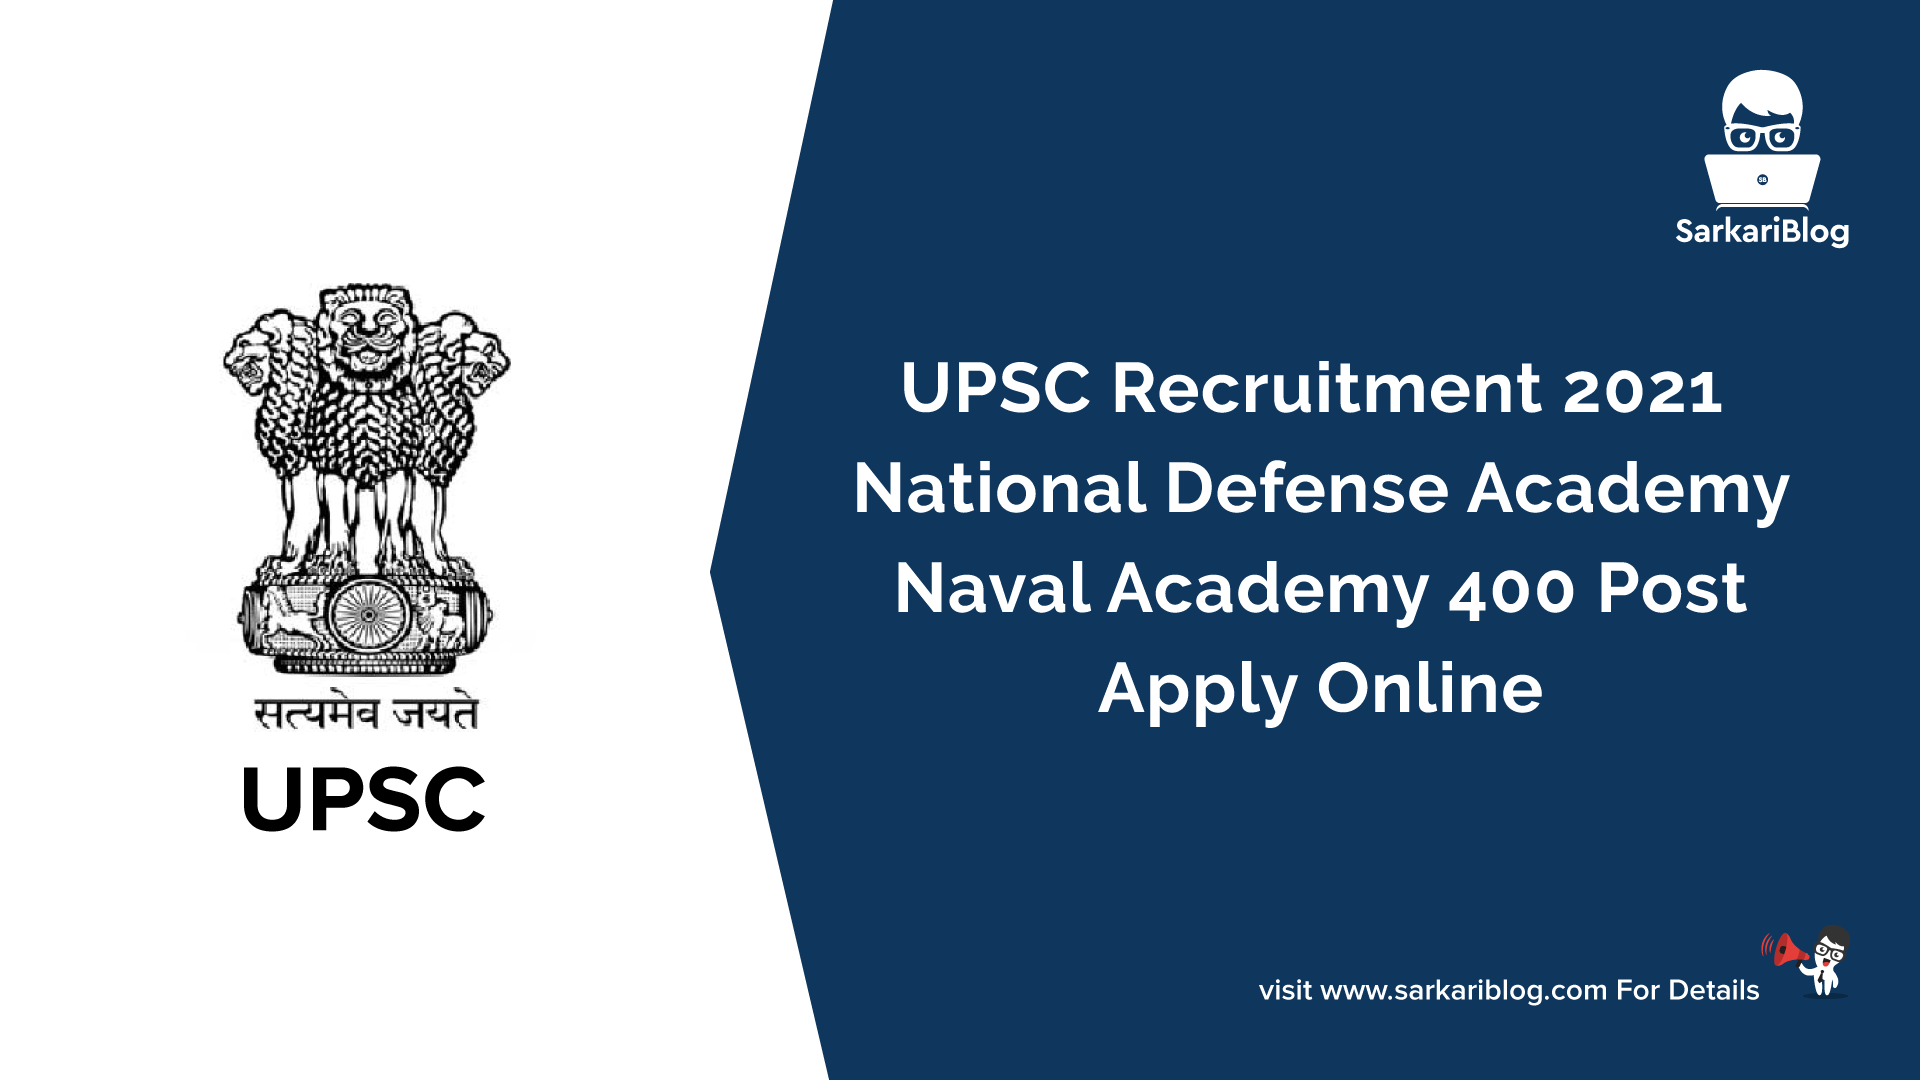 UPSC Recruitment 2021 - National Defense Academy, Naval Academy, 400 Post, Apply Online